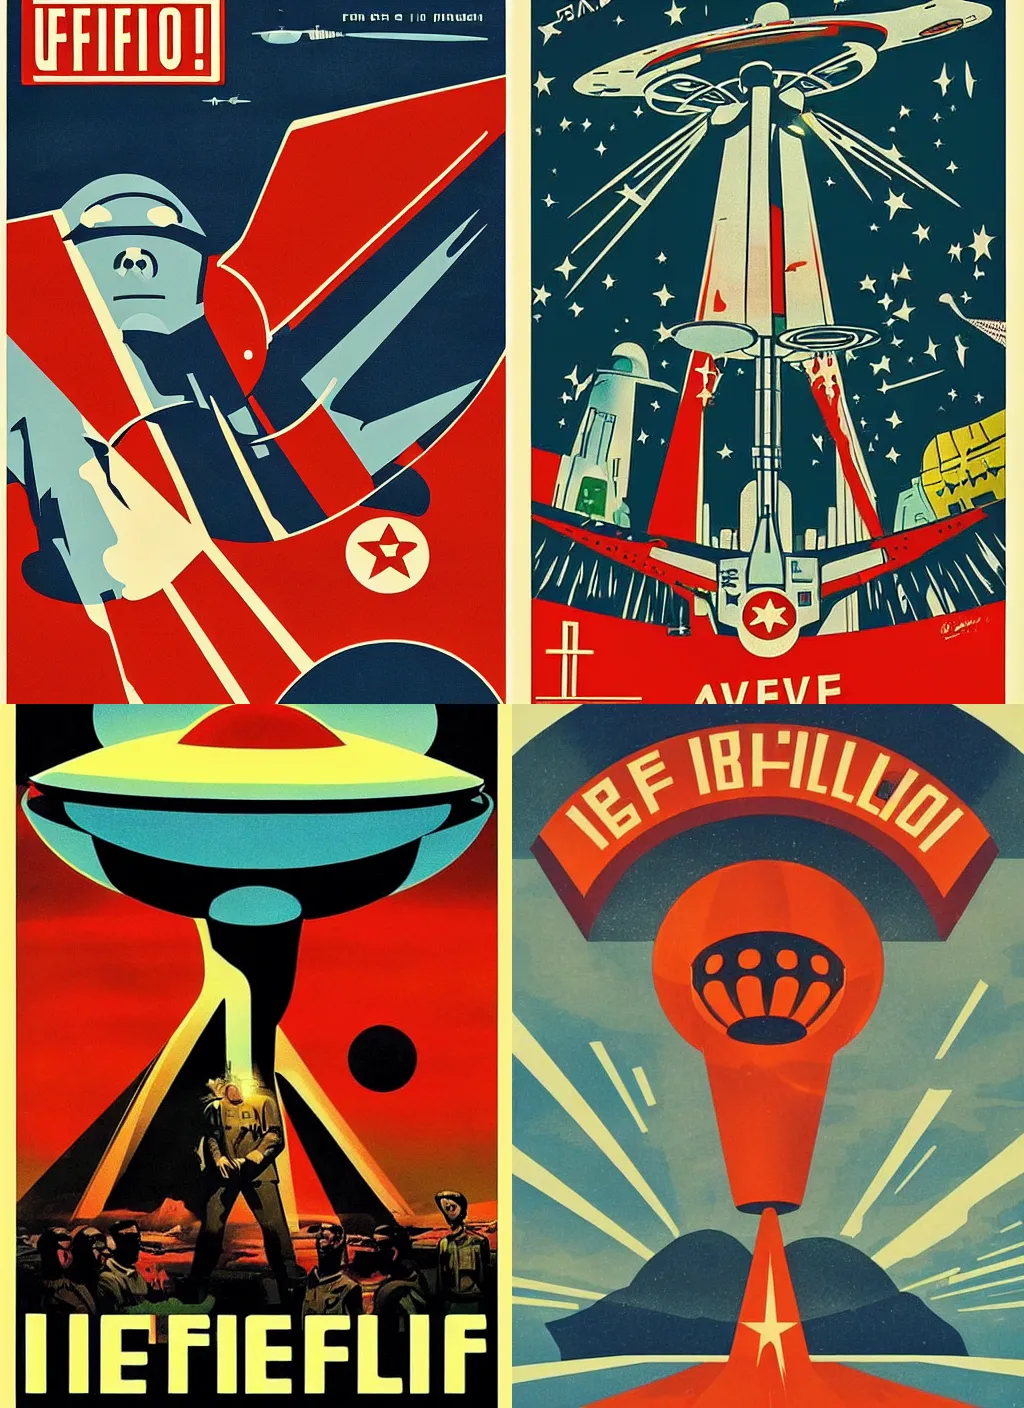 Prompt: I believe! UFO soviet propaganda poster, by Greg Rutkowsky